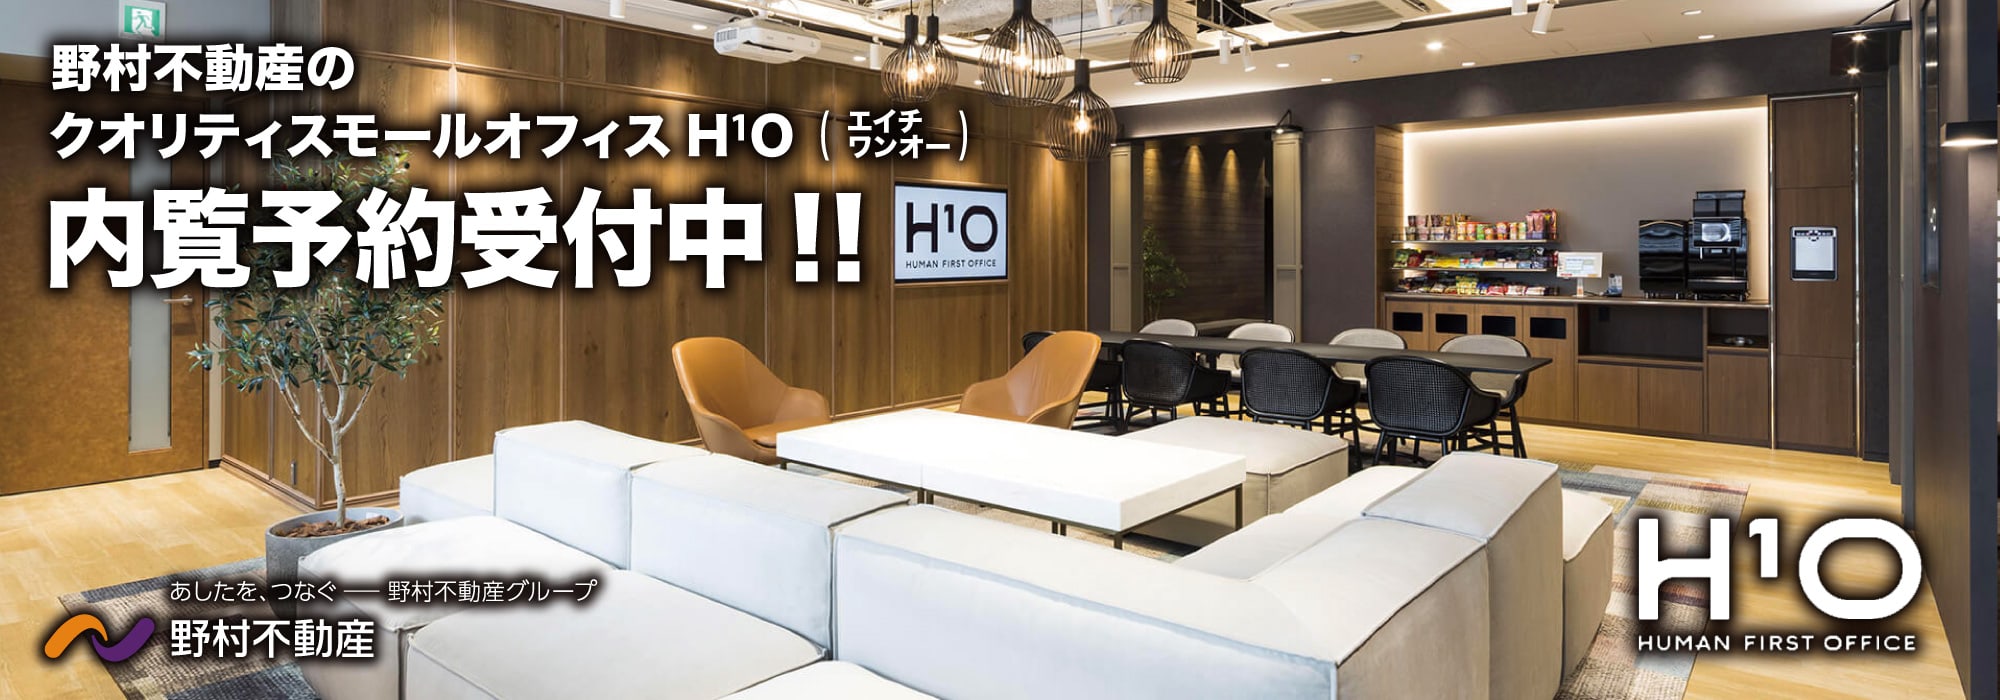 【H¹O日本橋室町】スモールオフィスにこそ、ひとつ上のクオリティを。野村不動産プロデュースによる三越前駅エリアのレンタルオフィス「H¹O（エイチワンオー）」